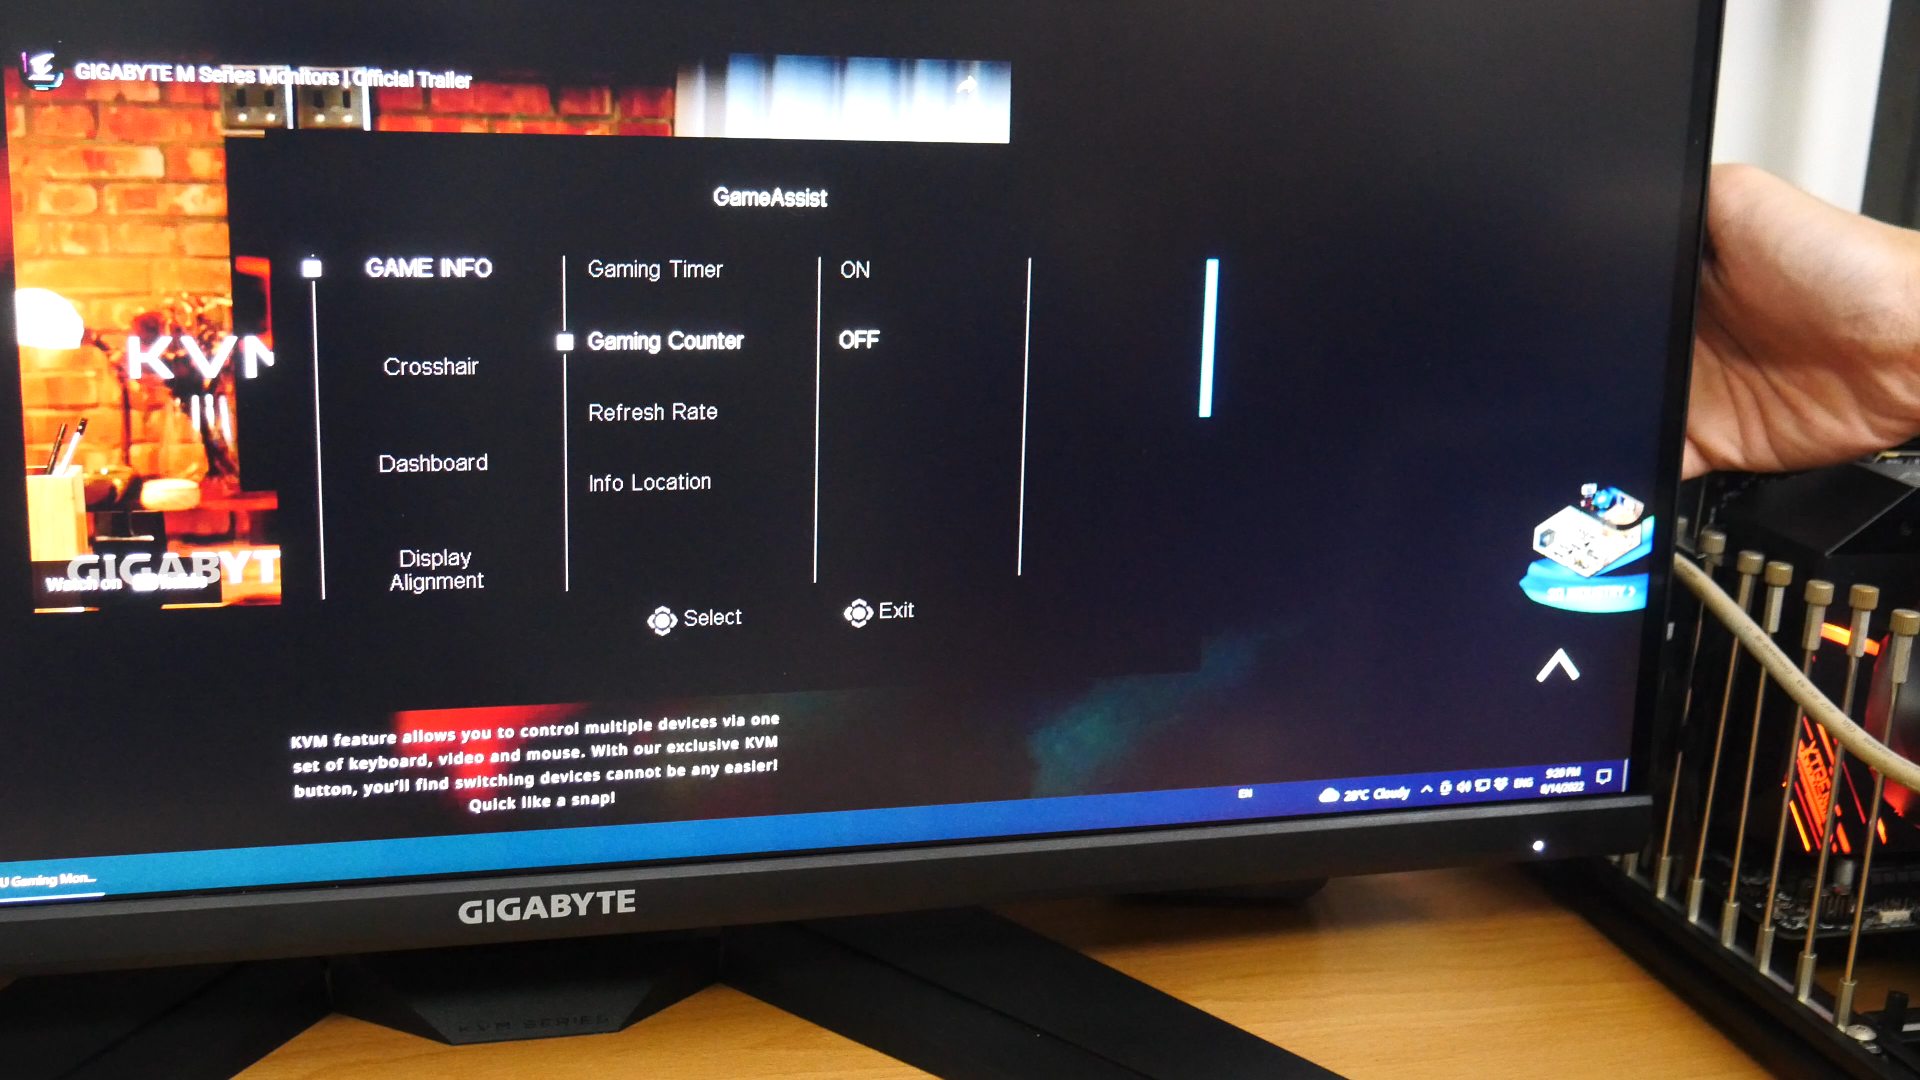 Review: Gigabyte M32U 32 4K Gaming Monitor